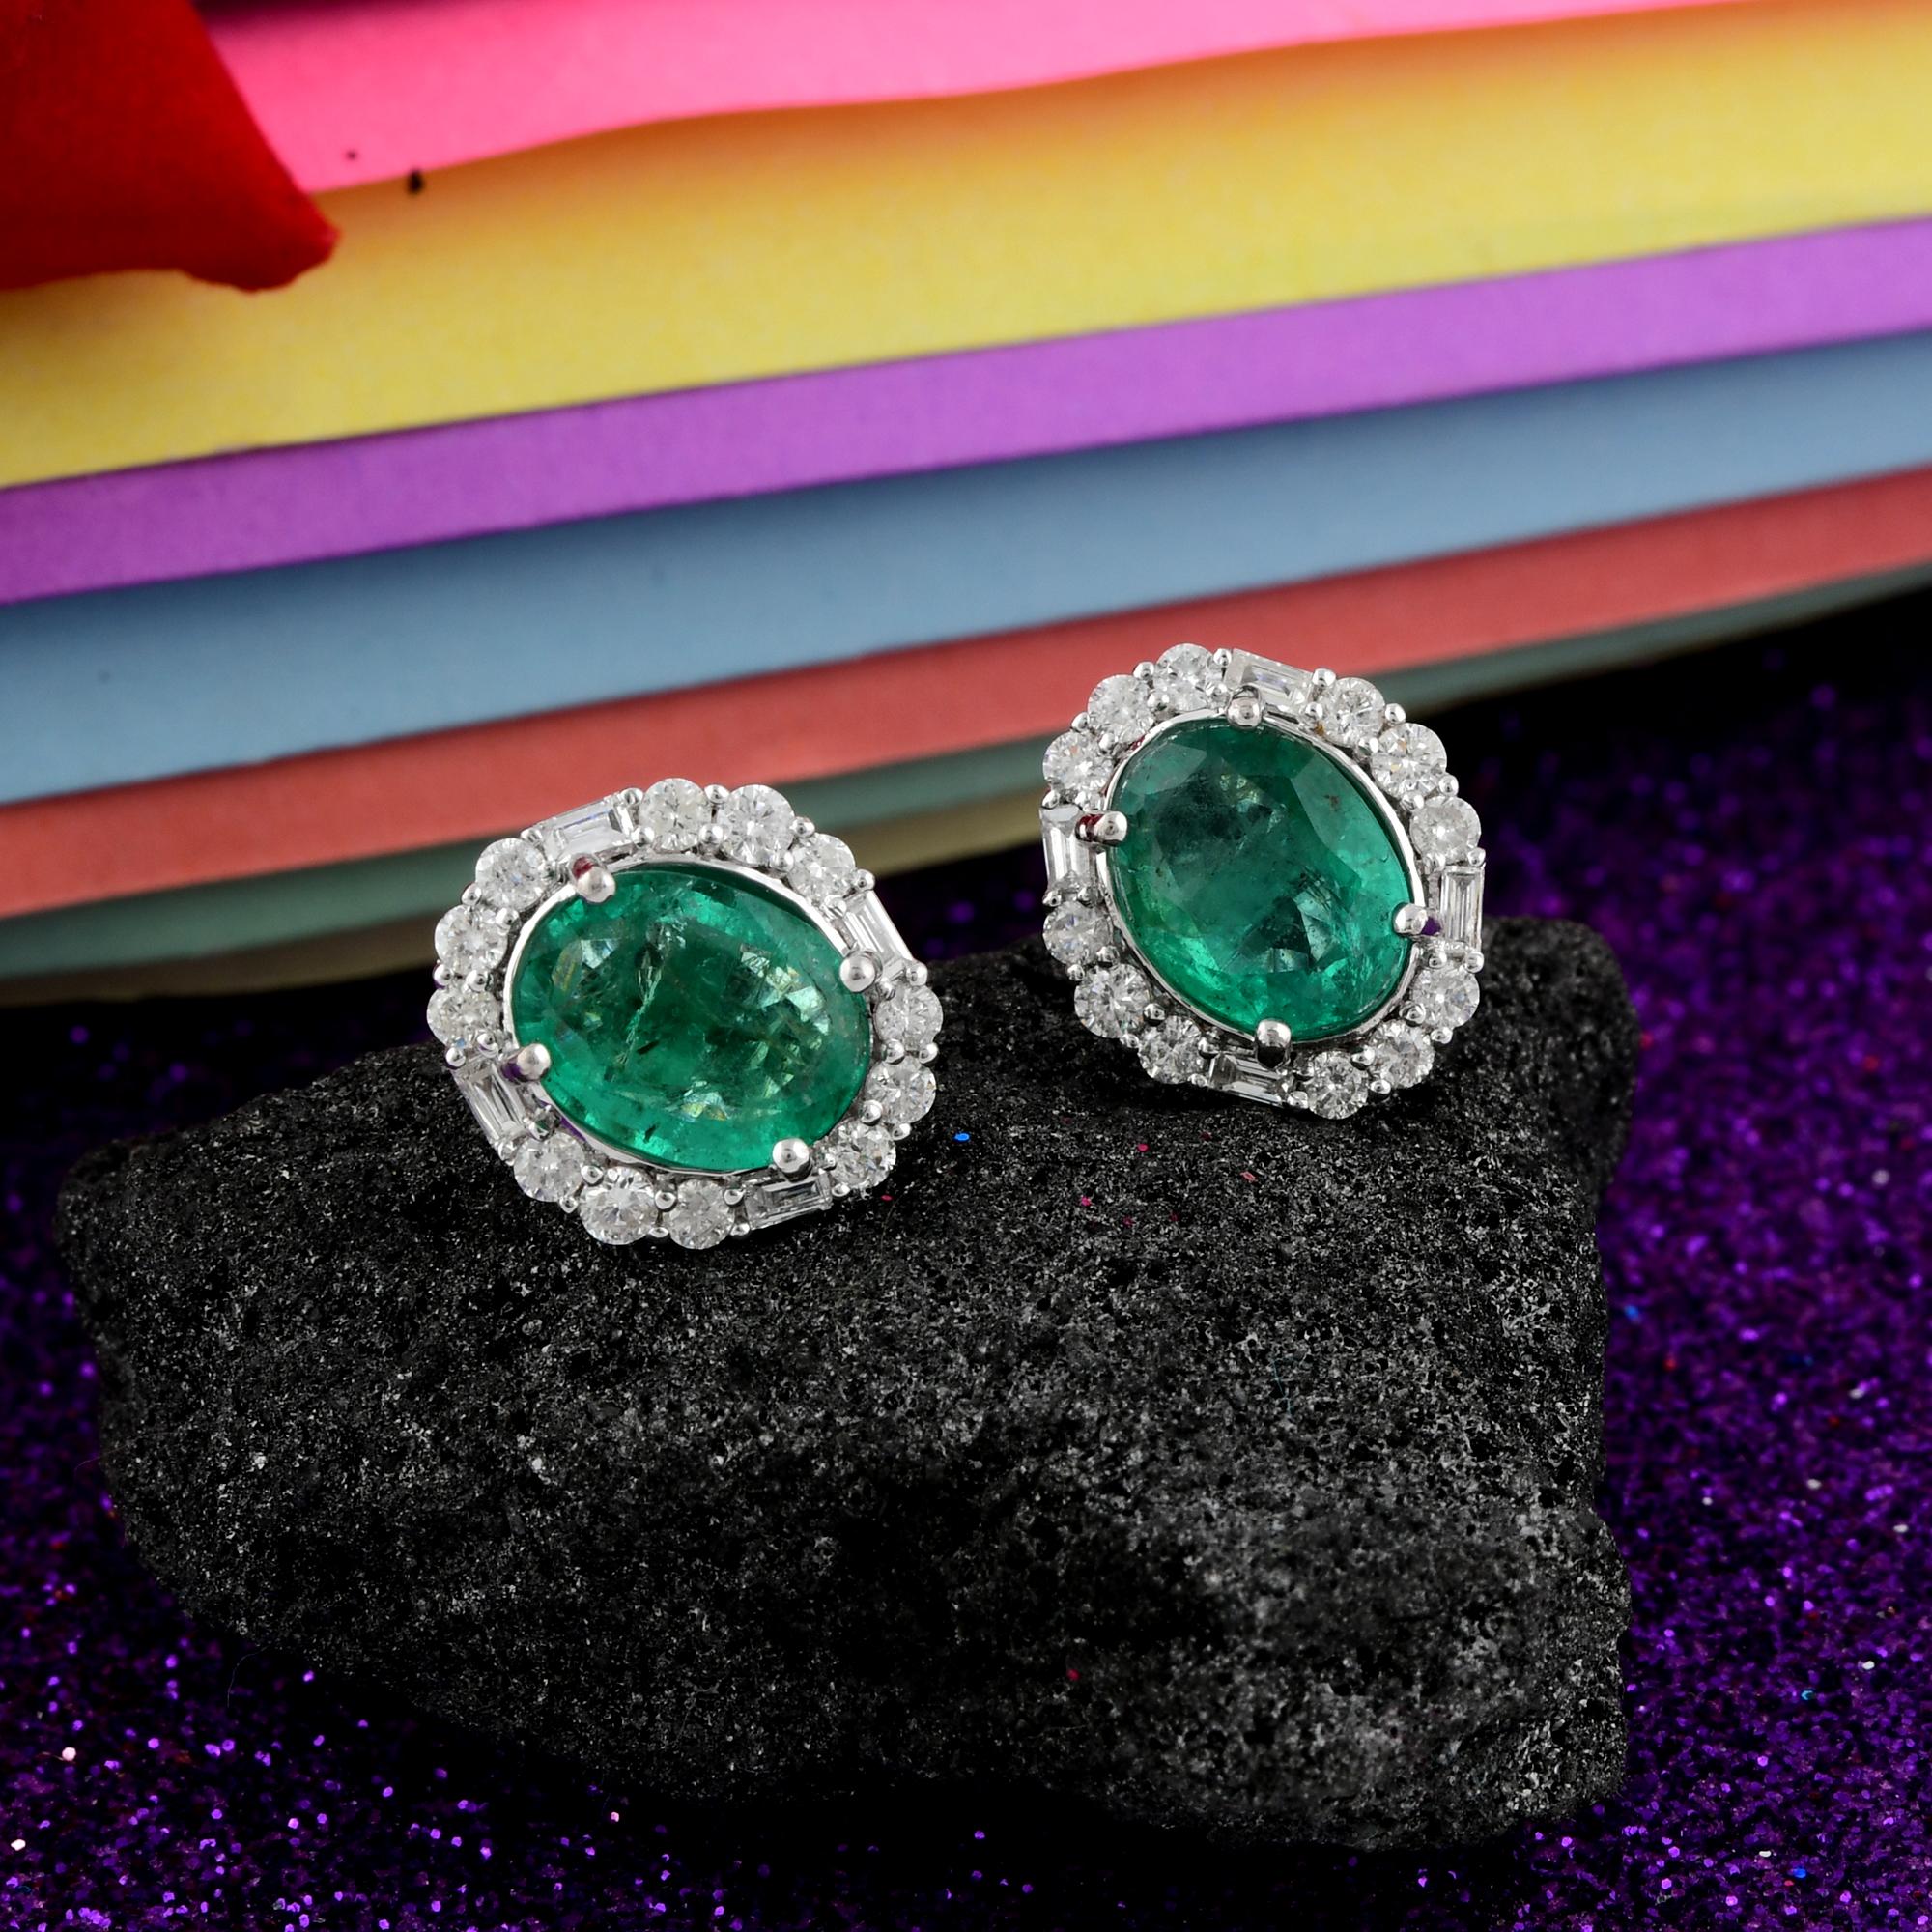 Oval Cut Oval Natural Emerald Gemstone Stud Earrings Diamond 18 Karat White Gold Jewelry For Sale